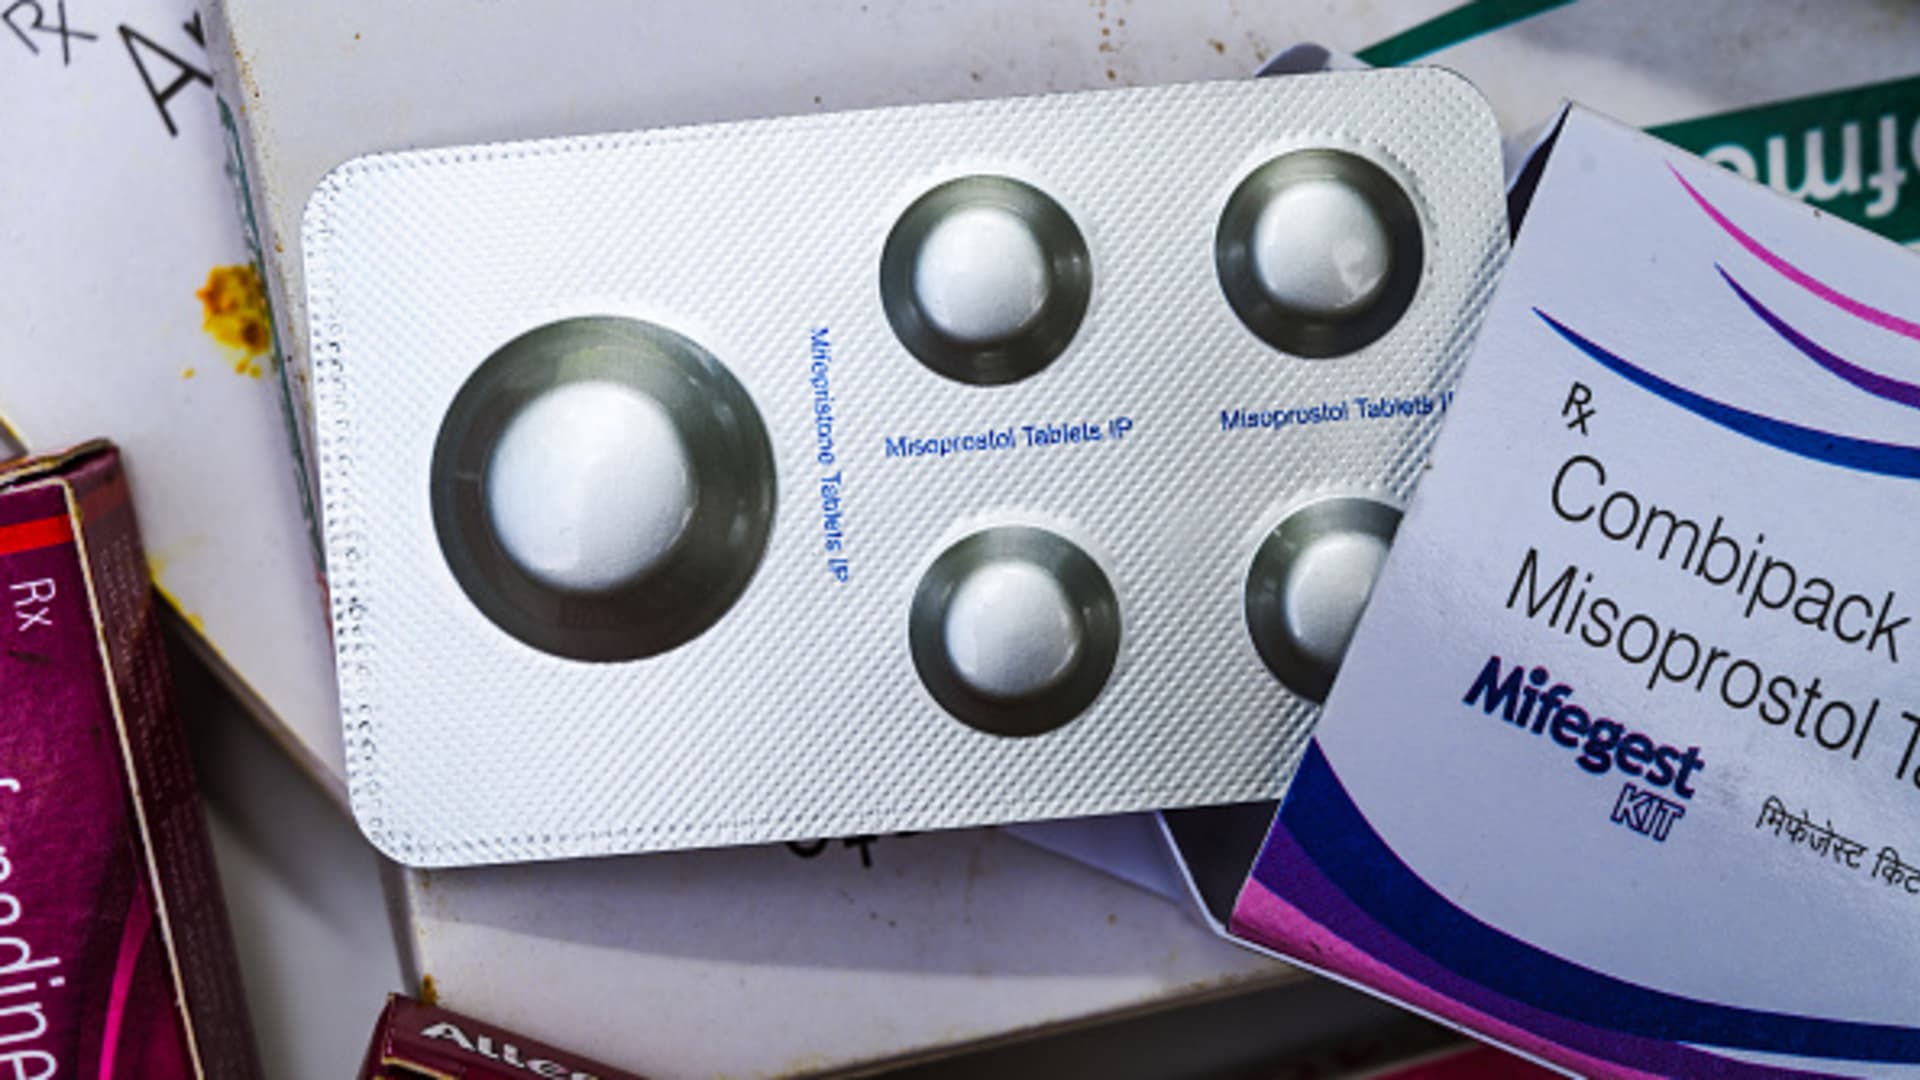 Abortion pill company asks Supreme Court to decide mifepristone case